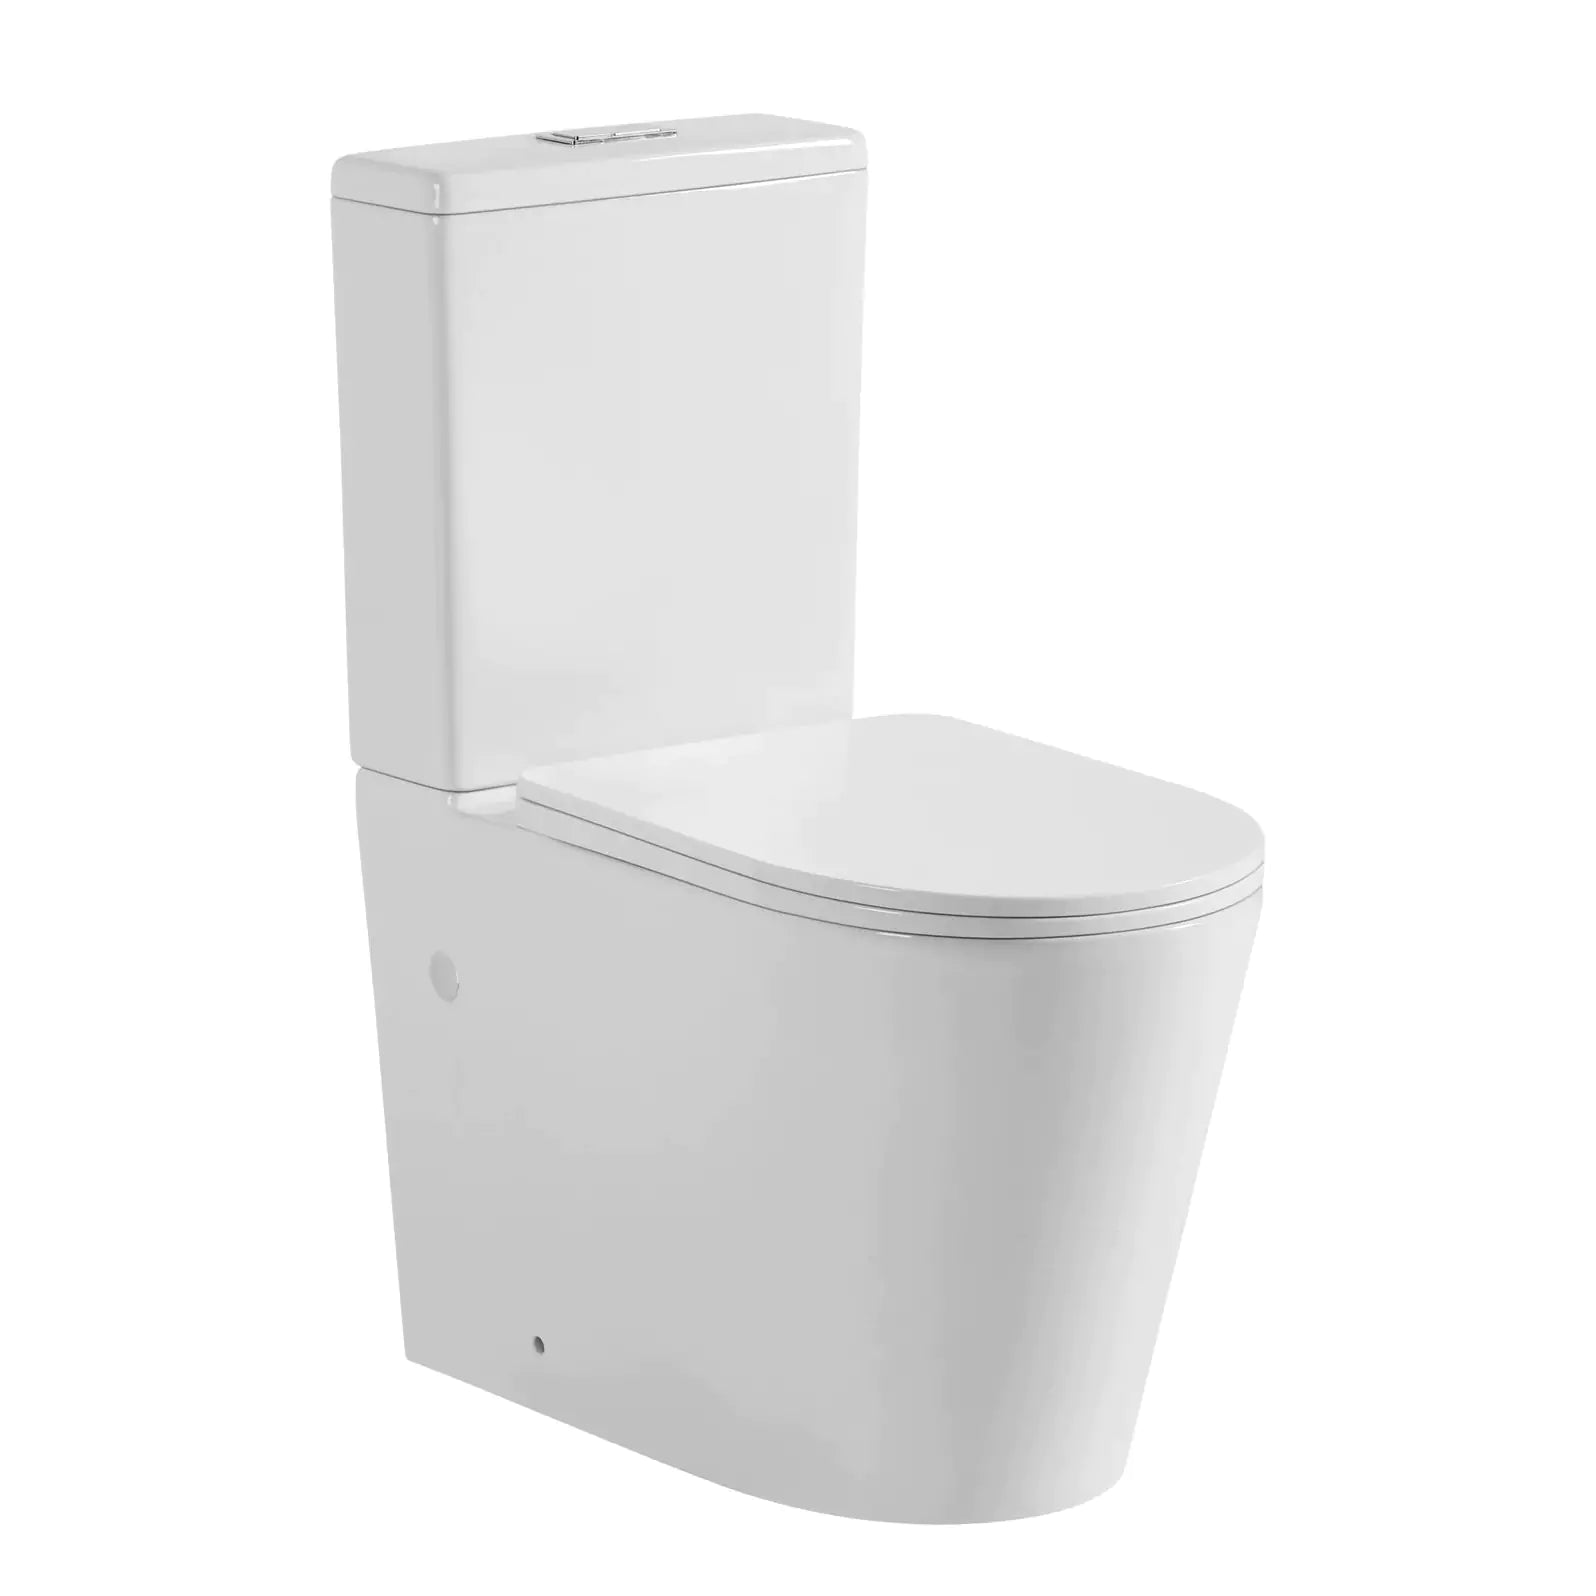 Avis Compact Rimless Toilet Suite: Modern Space-Saving Design-Gloss White-KDK600C/KDK600P